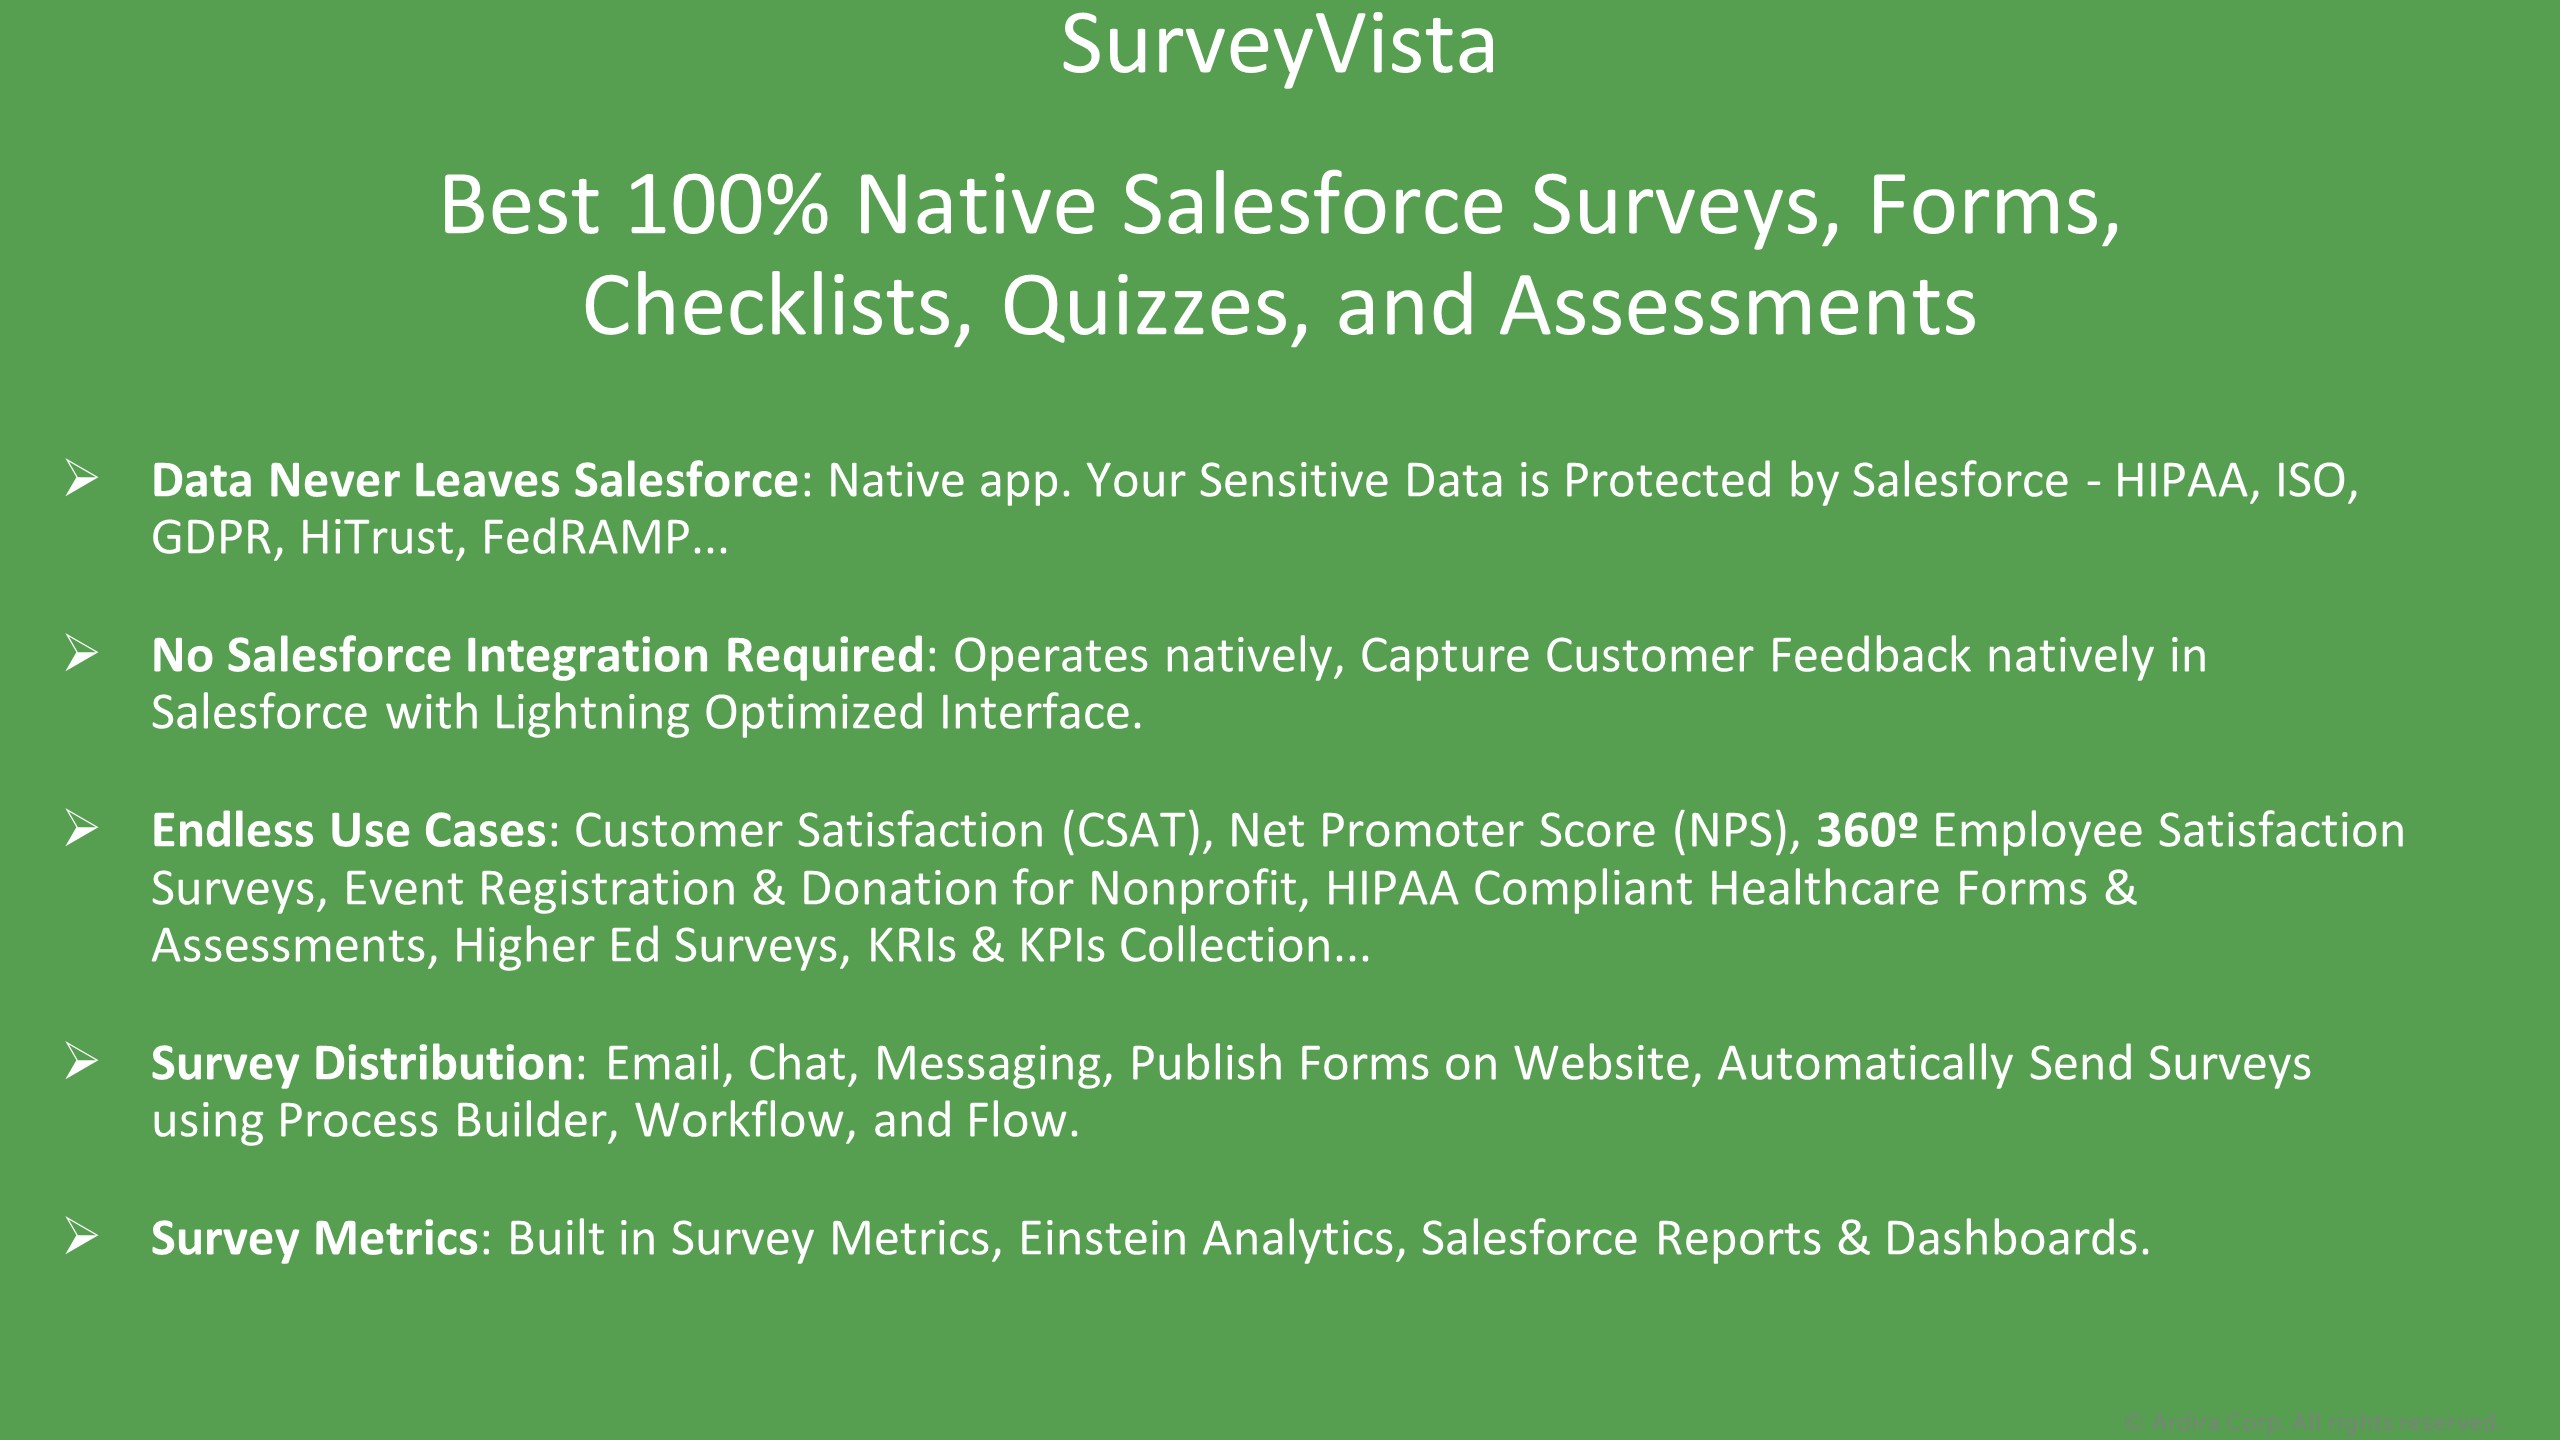 Best 100% Native Salesforce Surveys, Forms, Checklists, Quizzes, and Assessments